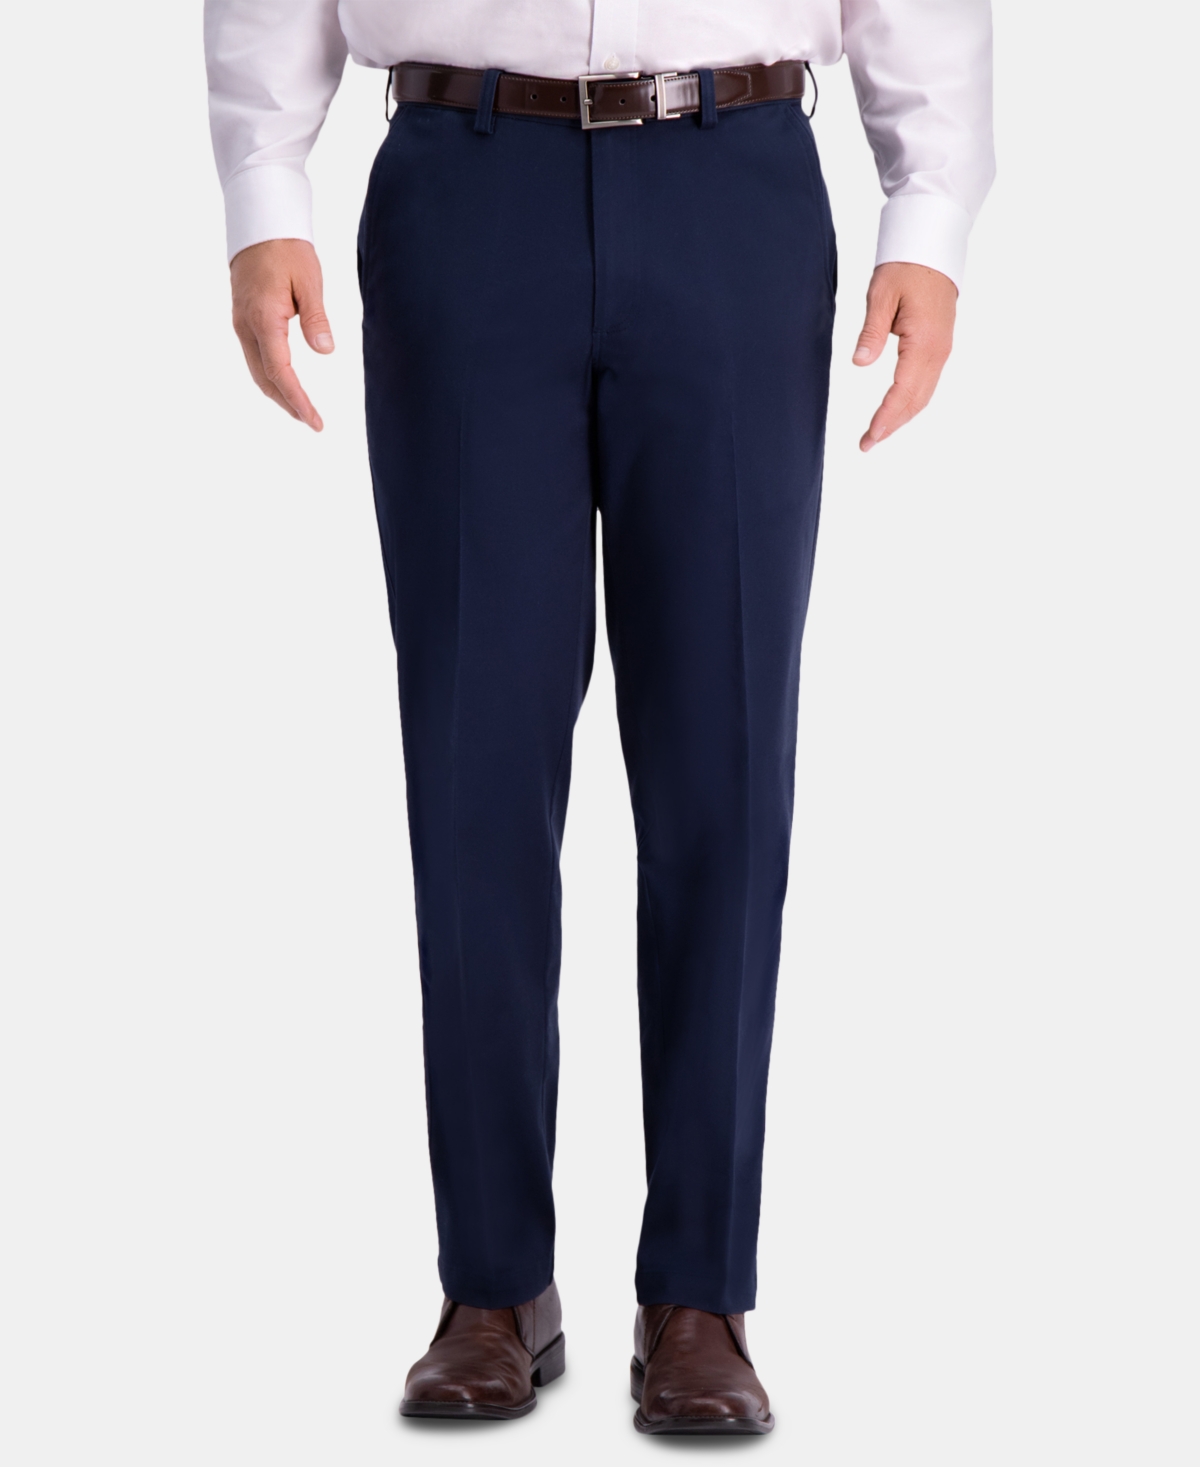 Men's Premium Comfort Khaki Classic-Fit 2-Way Stretch Wrinkle Resistant Flat Front Stretch Casual Pants - Dark Navy